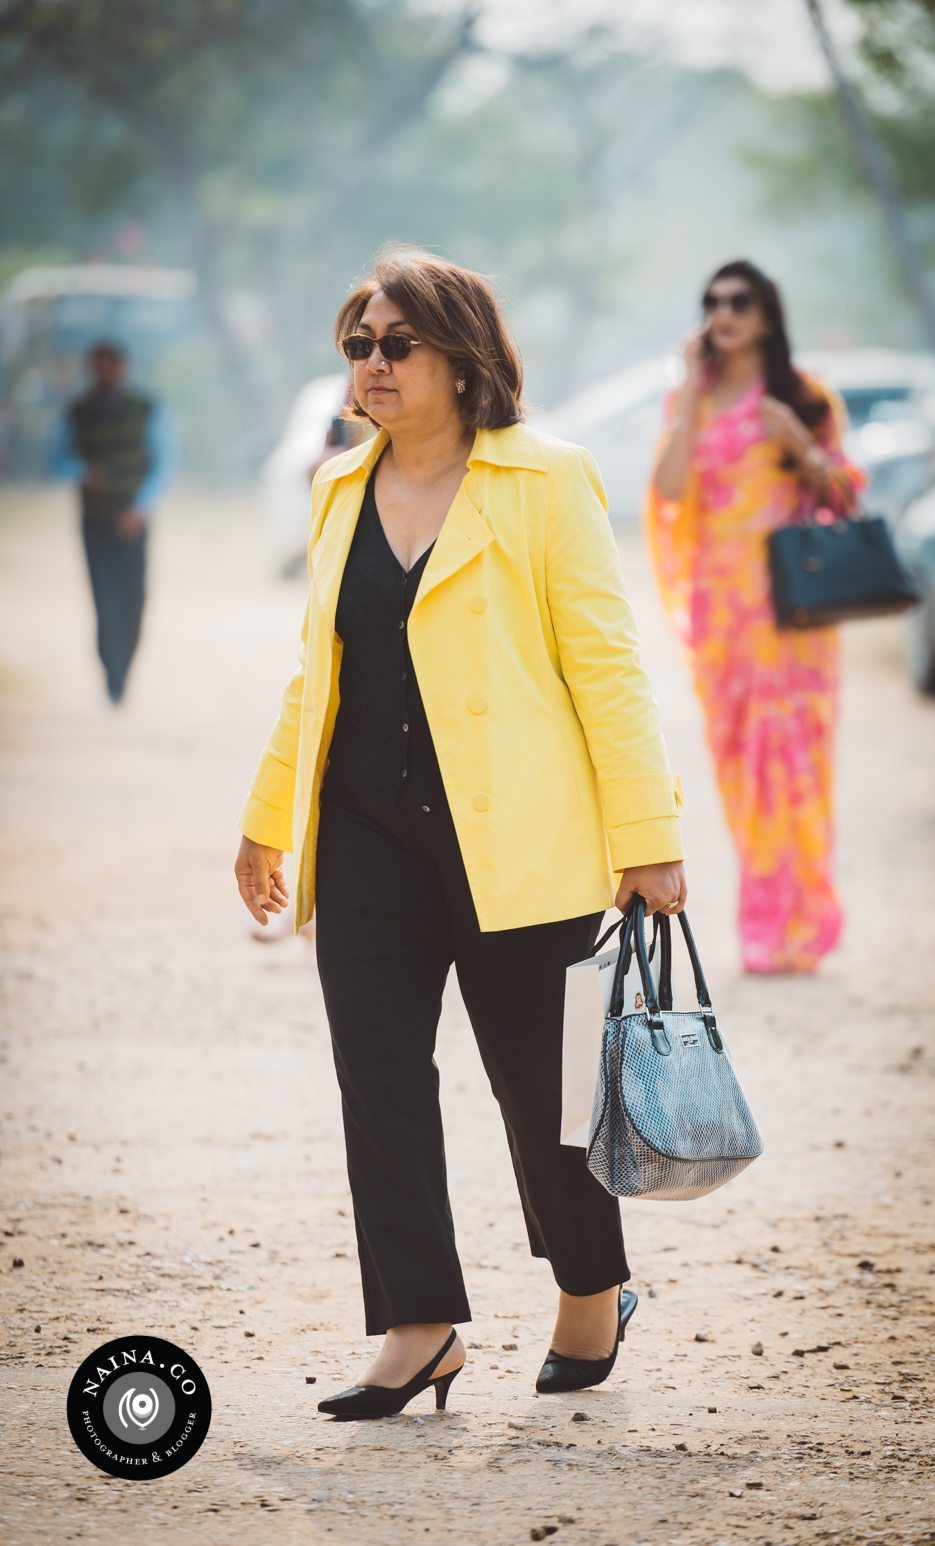 Naina.co-Raconteuse-Visuelle-Photographer-Blogger-Storyteller-Luxury-Lifestyle-January-2015-St.Regis-Polo-Cup-Maharaja-Jaipur-EyesForStreetStyle-06